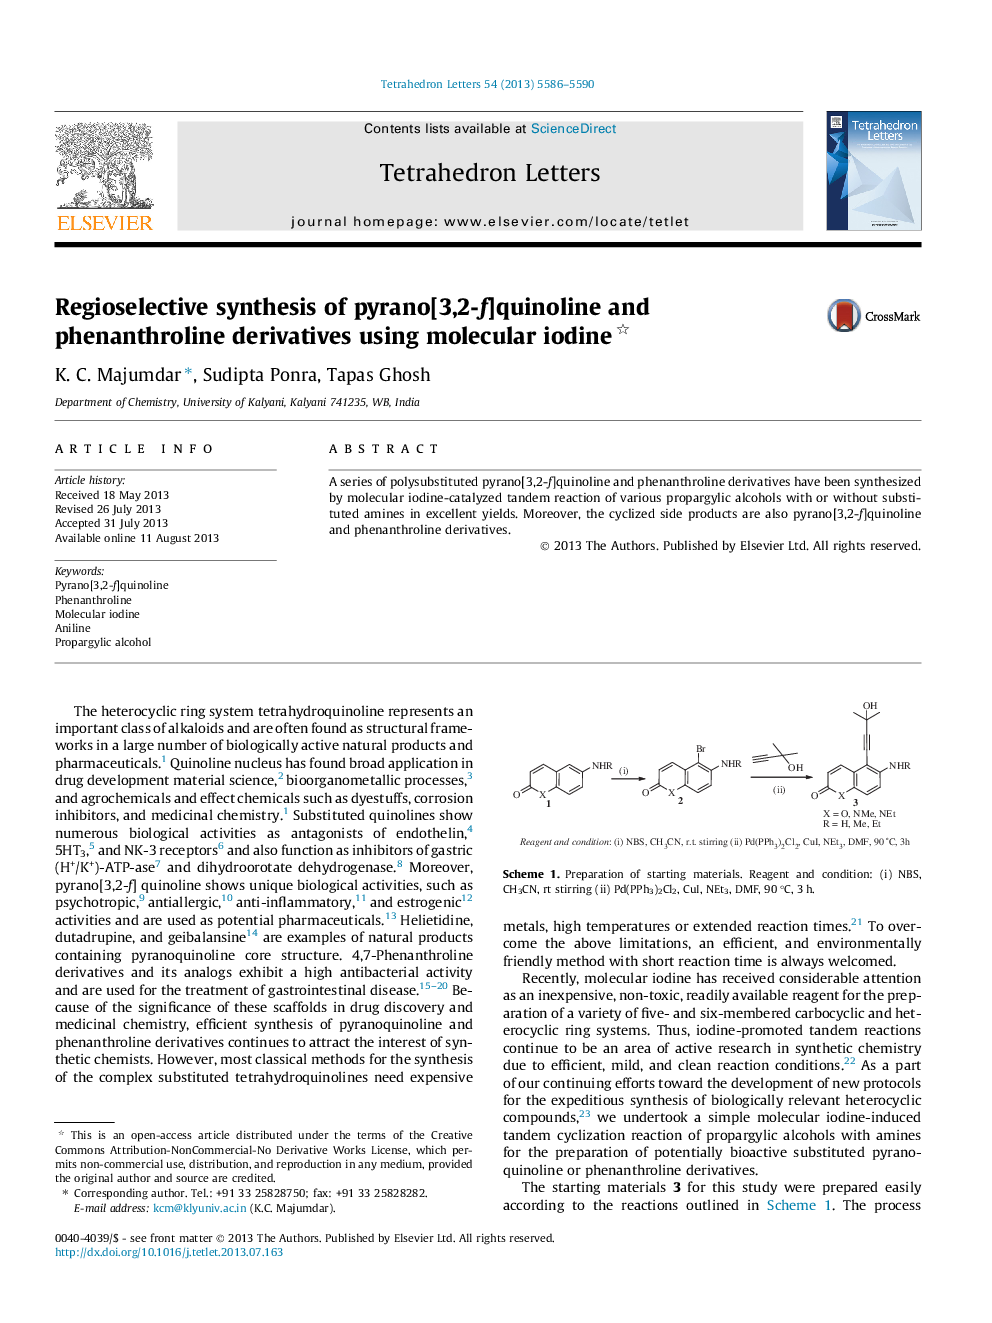 Regioselective synthesis of pyrano[3,2-f]quinoline and phenanthroline derivatives using molecular iodine